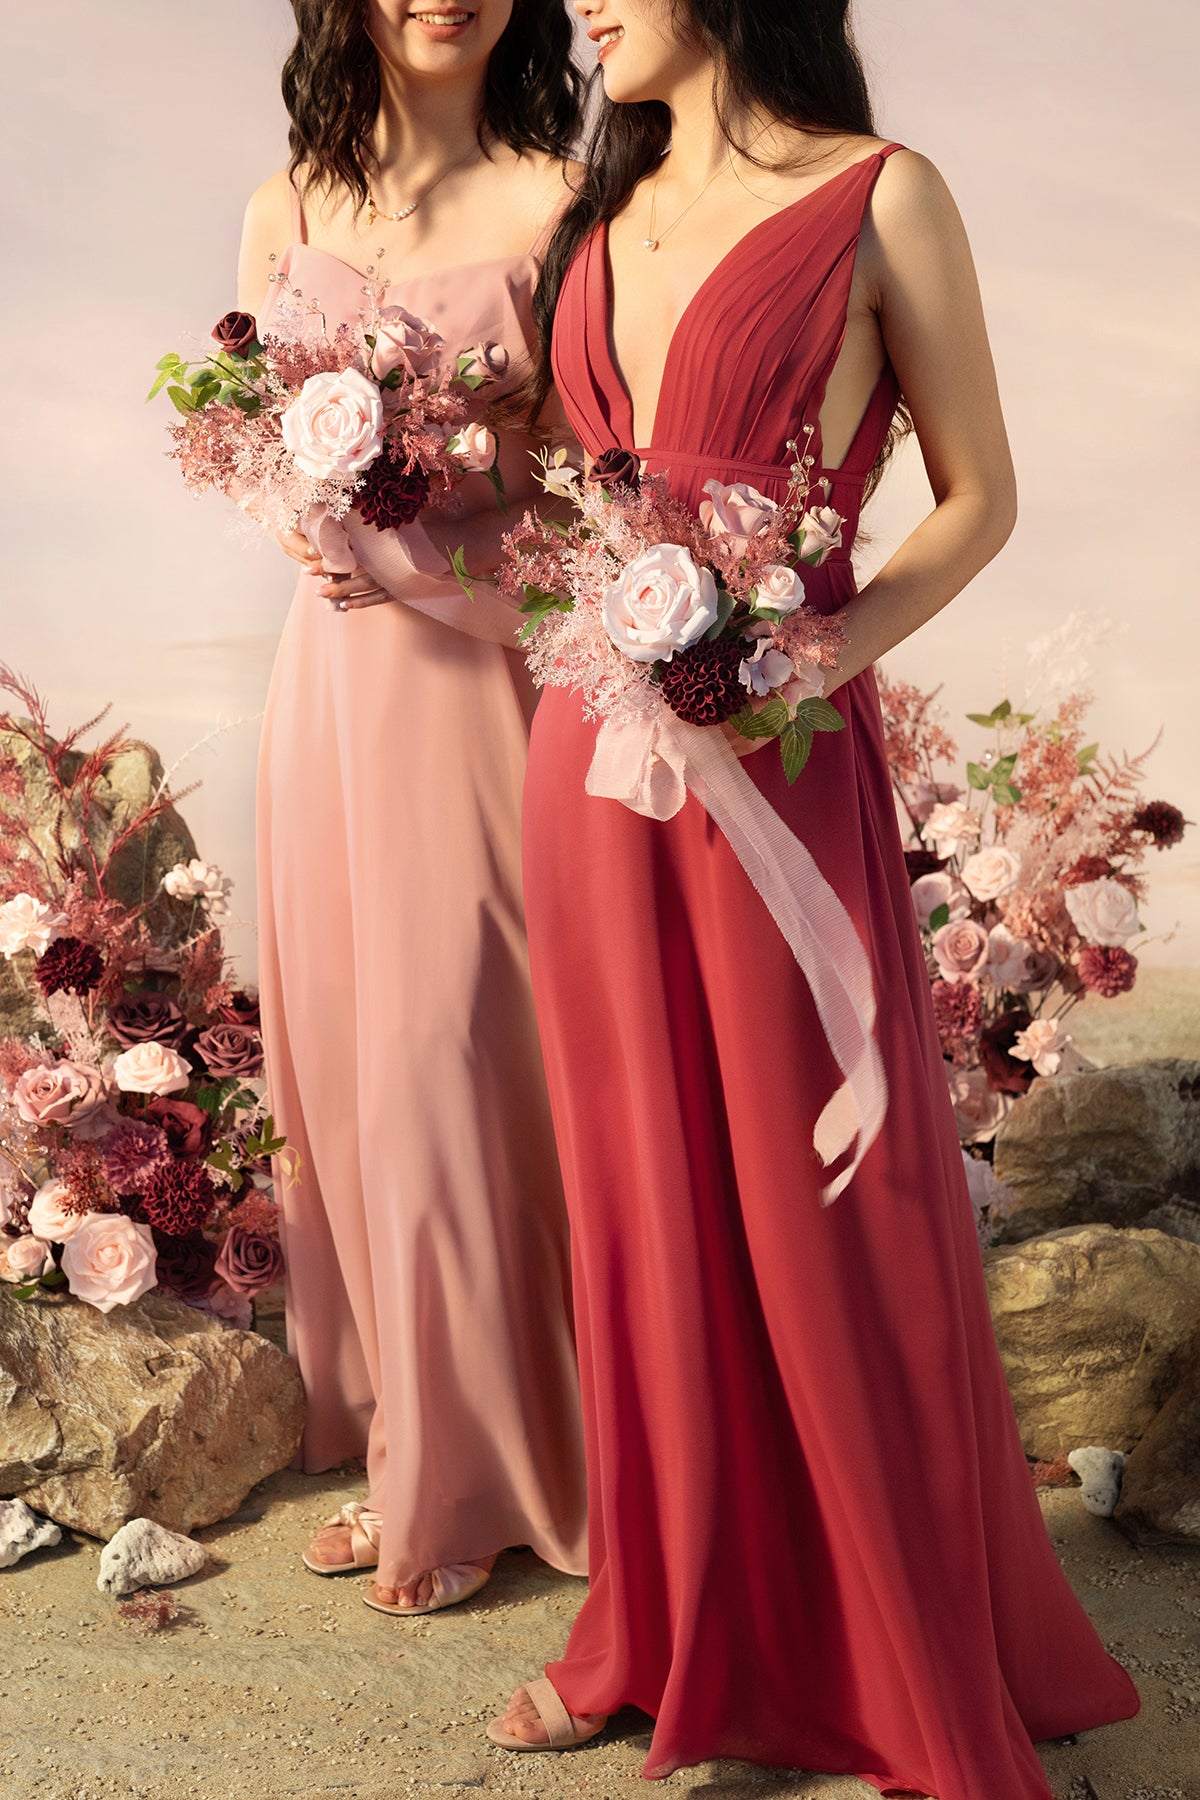 Bridesmaid Posy in Vintage Rose & Blush